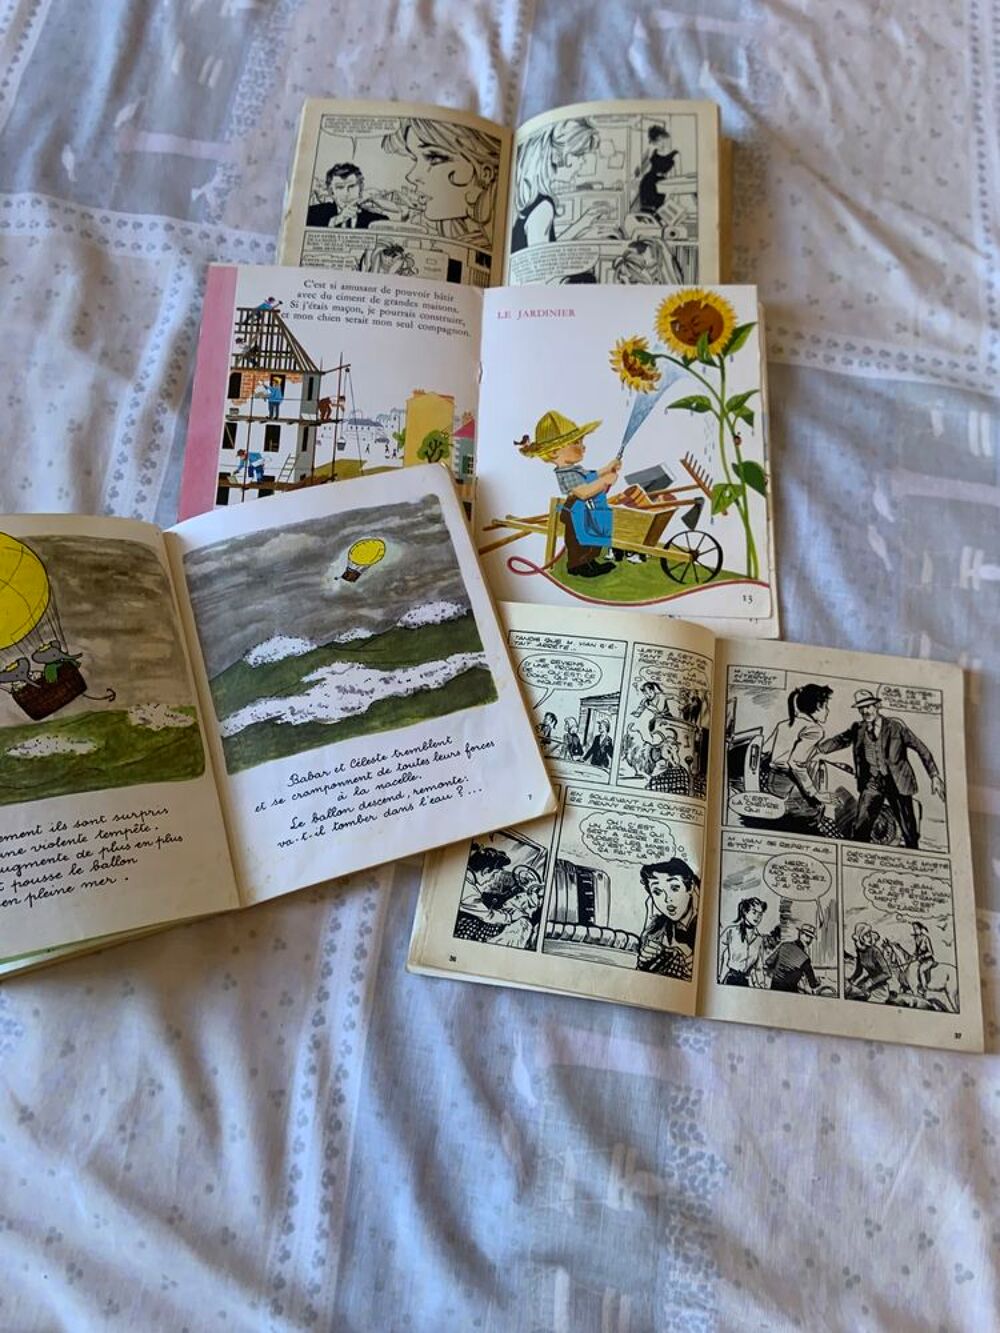 Lot 11 livres enfants vintage Livres et BD